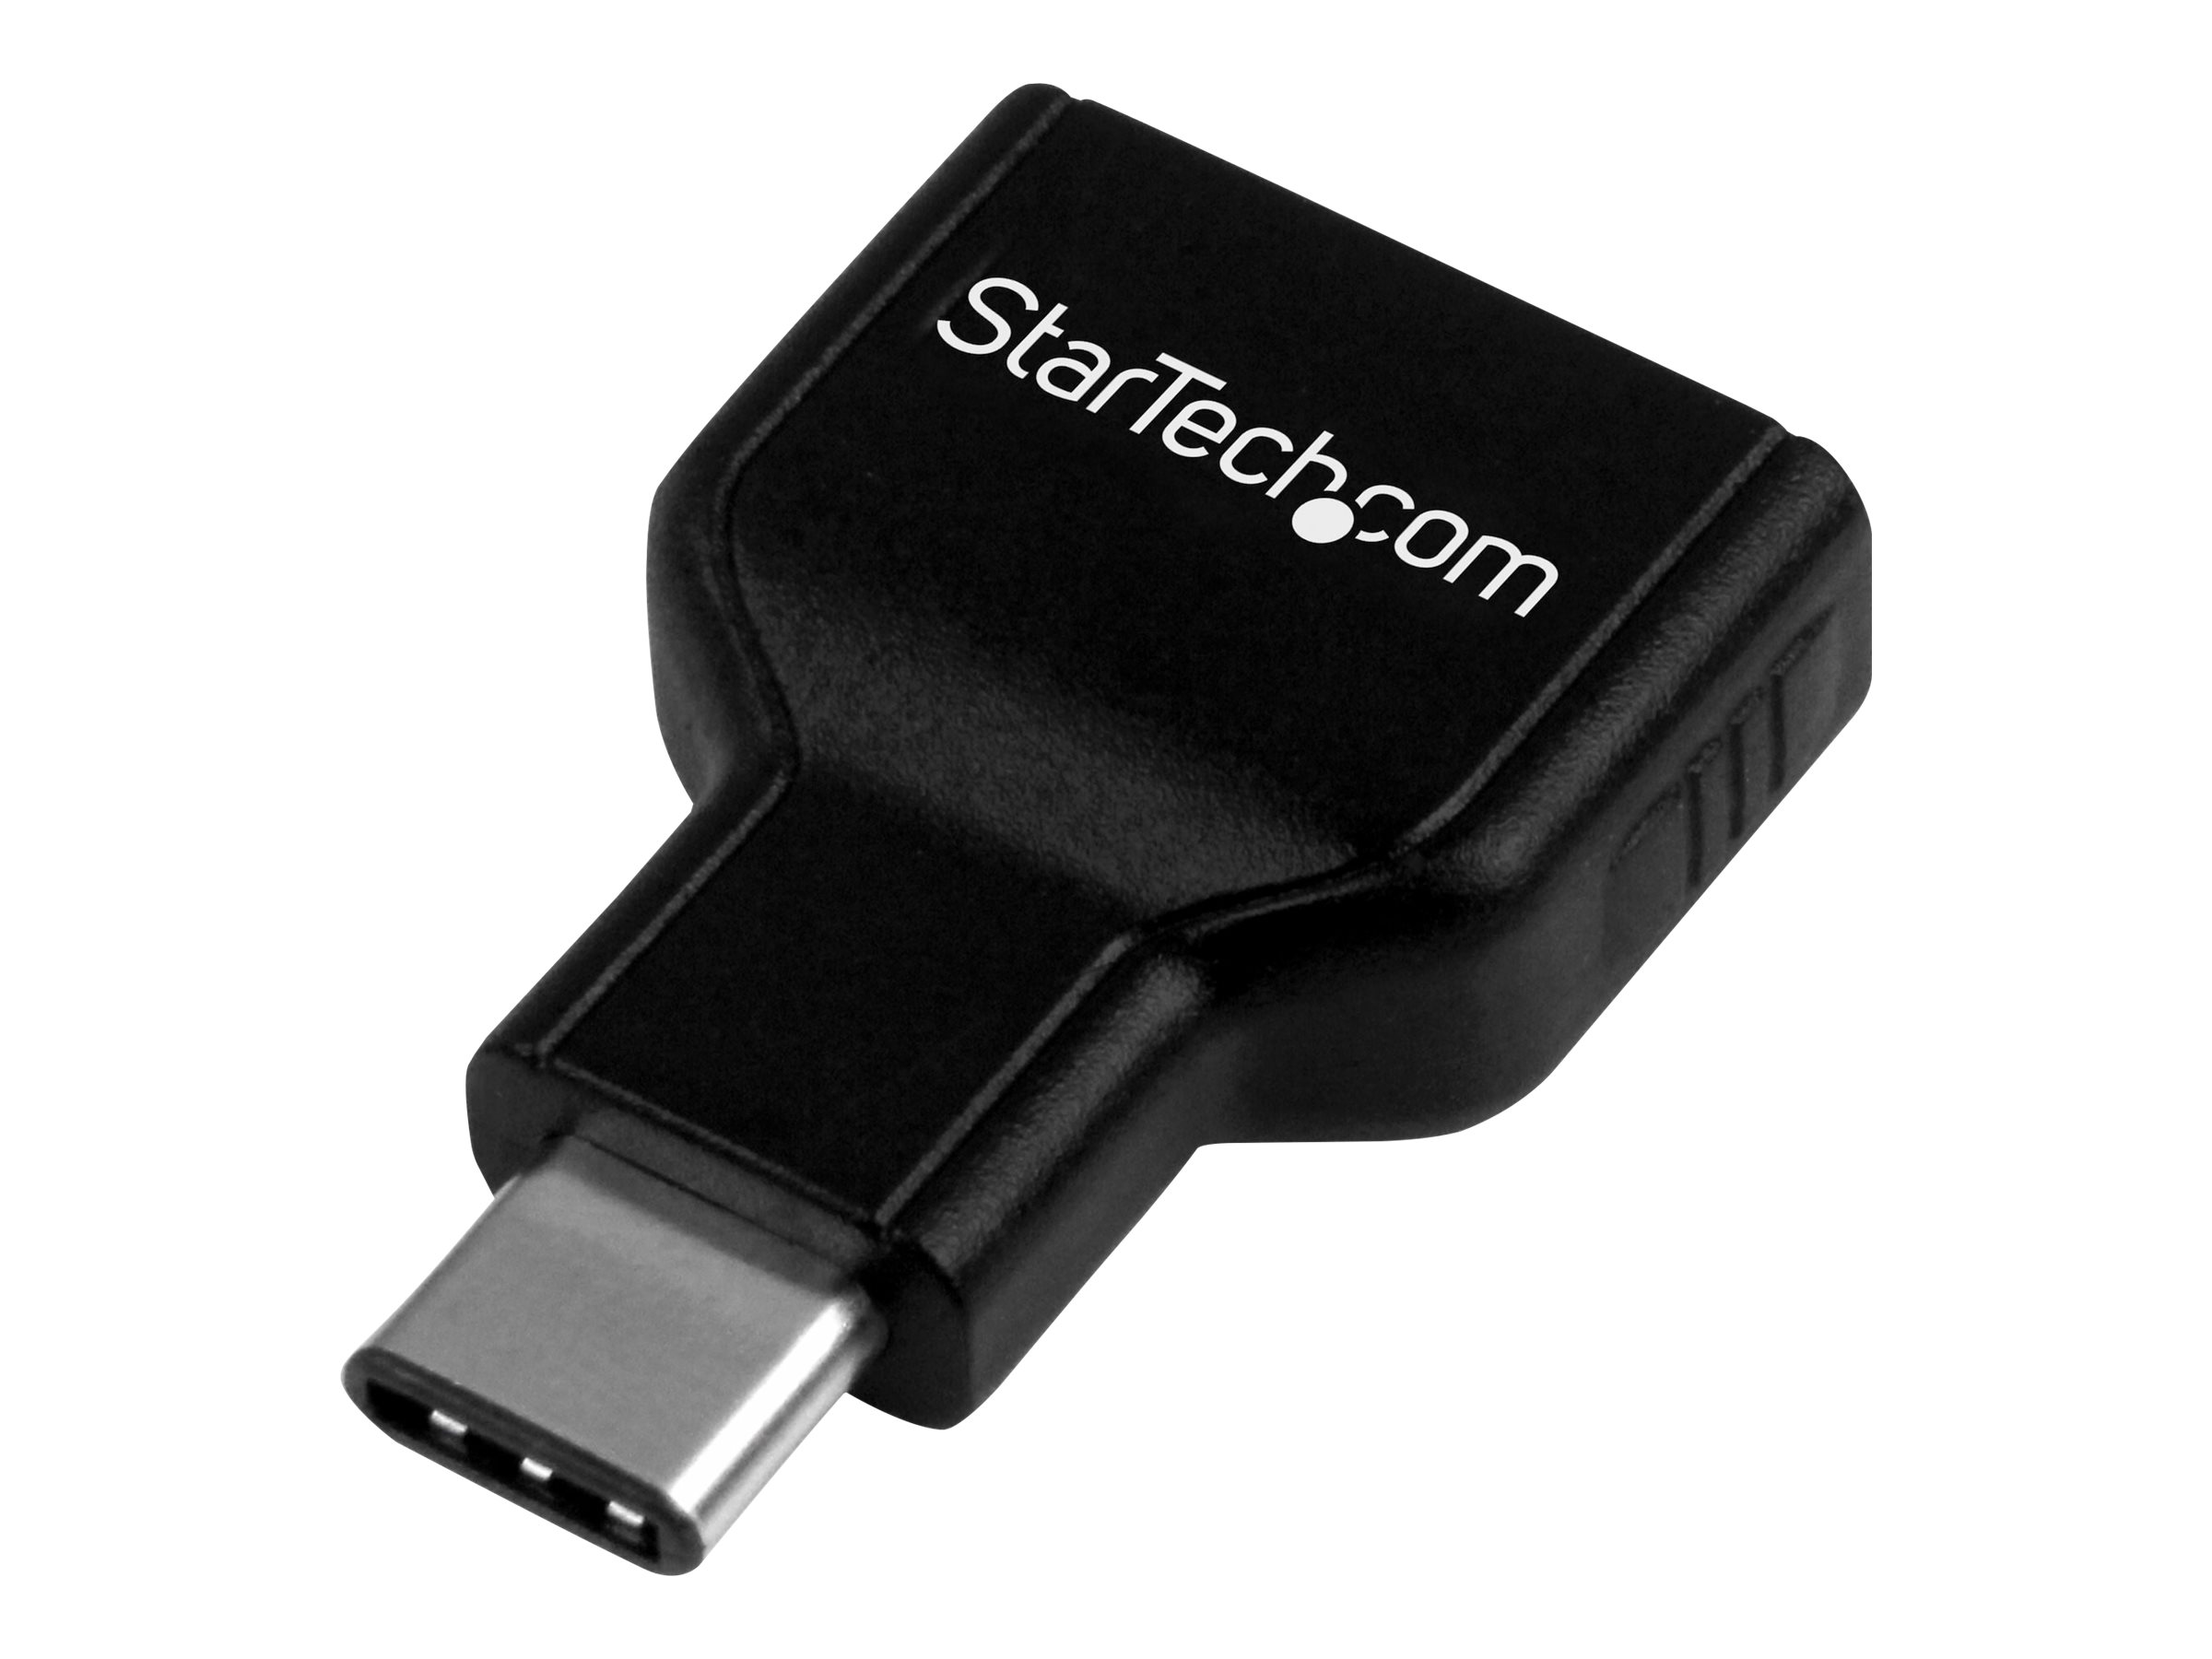 StarTech.com USB-C to USB Adapter